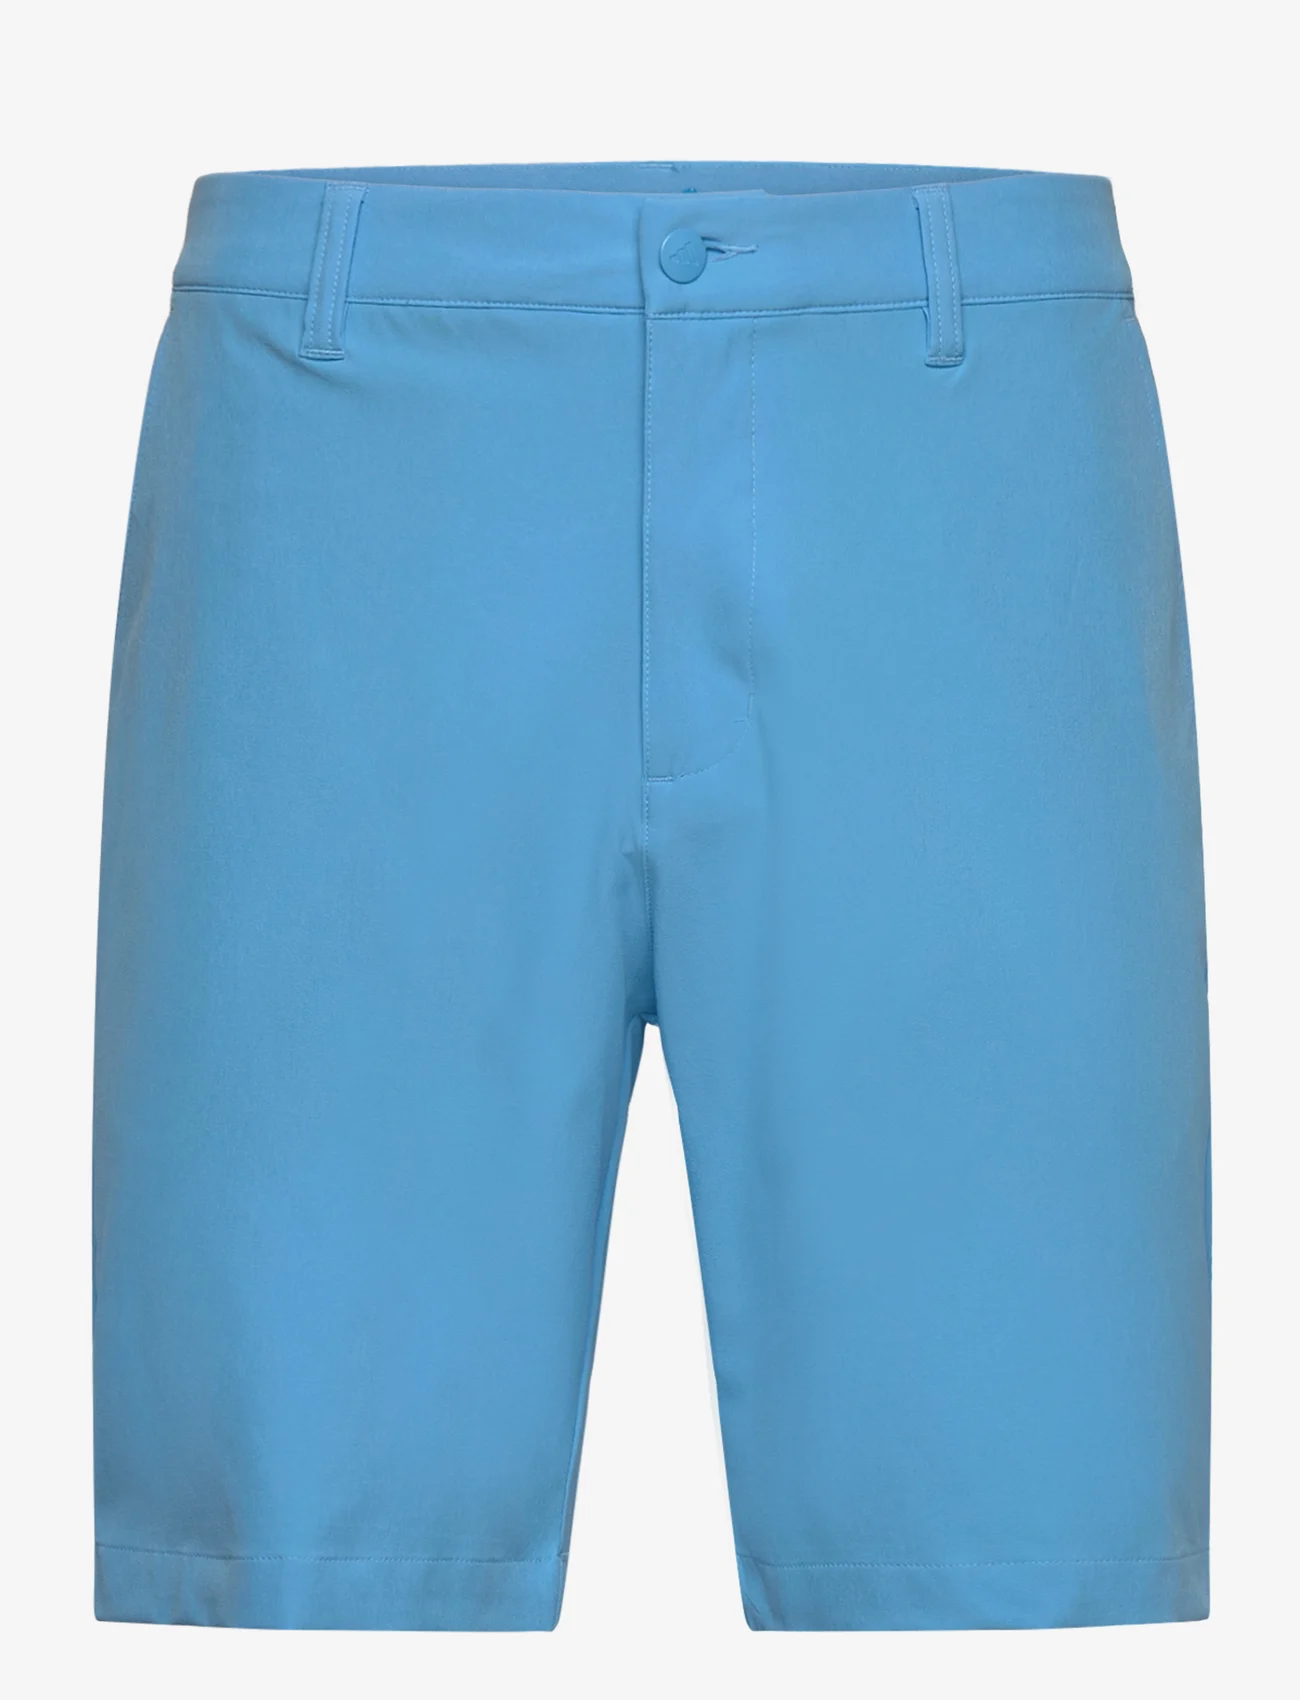 adidas Golf - ULT 8.5IN SHORT - sports shorts - seblbu - 0